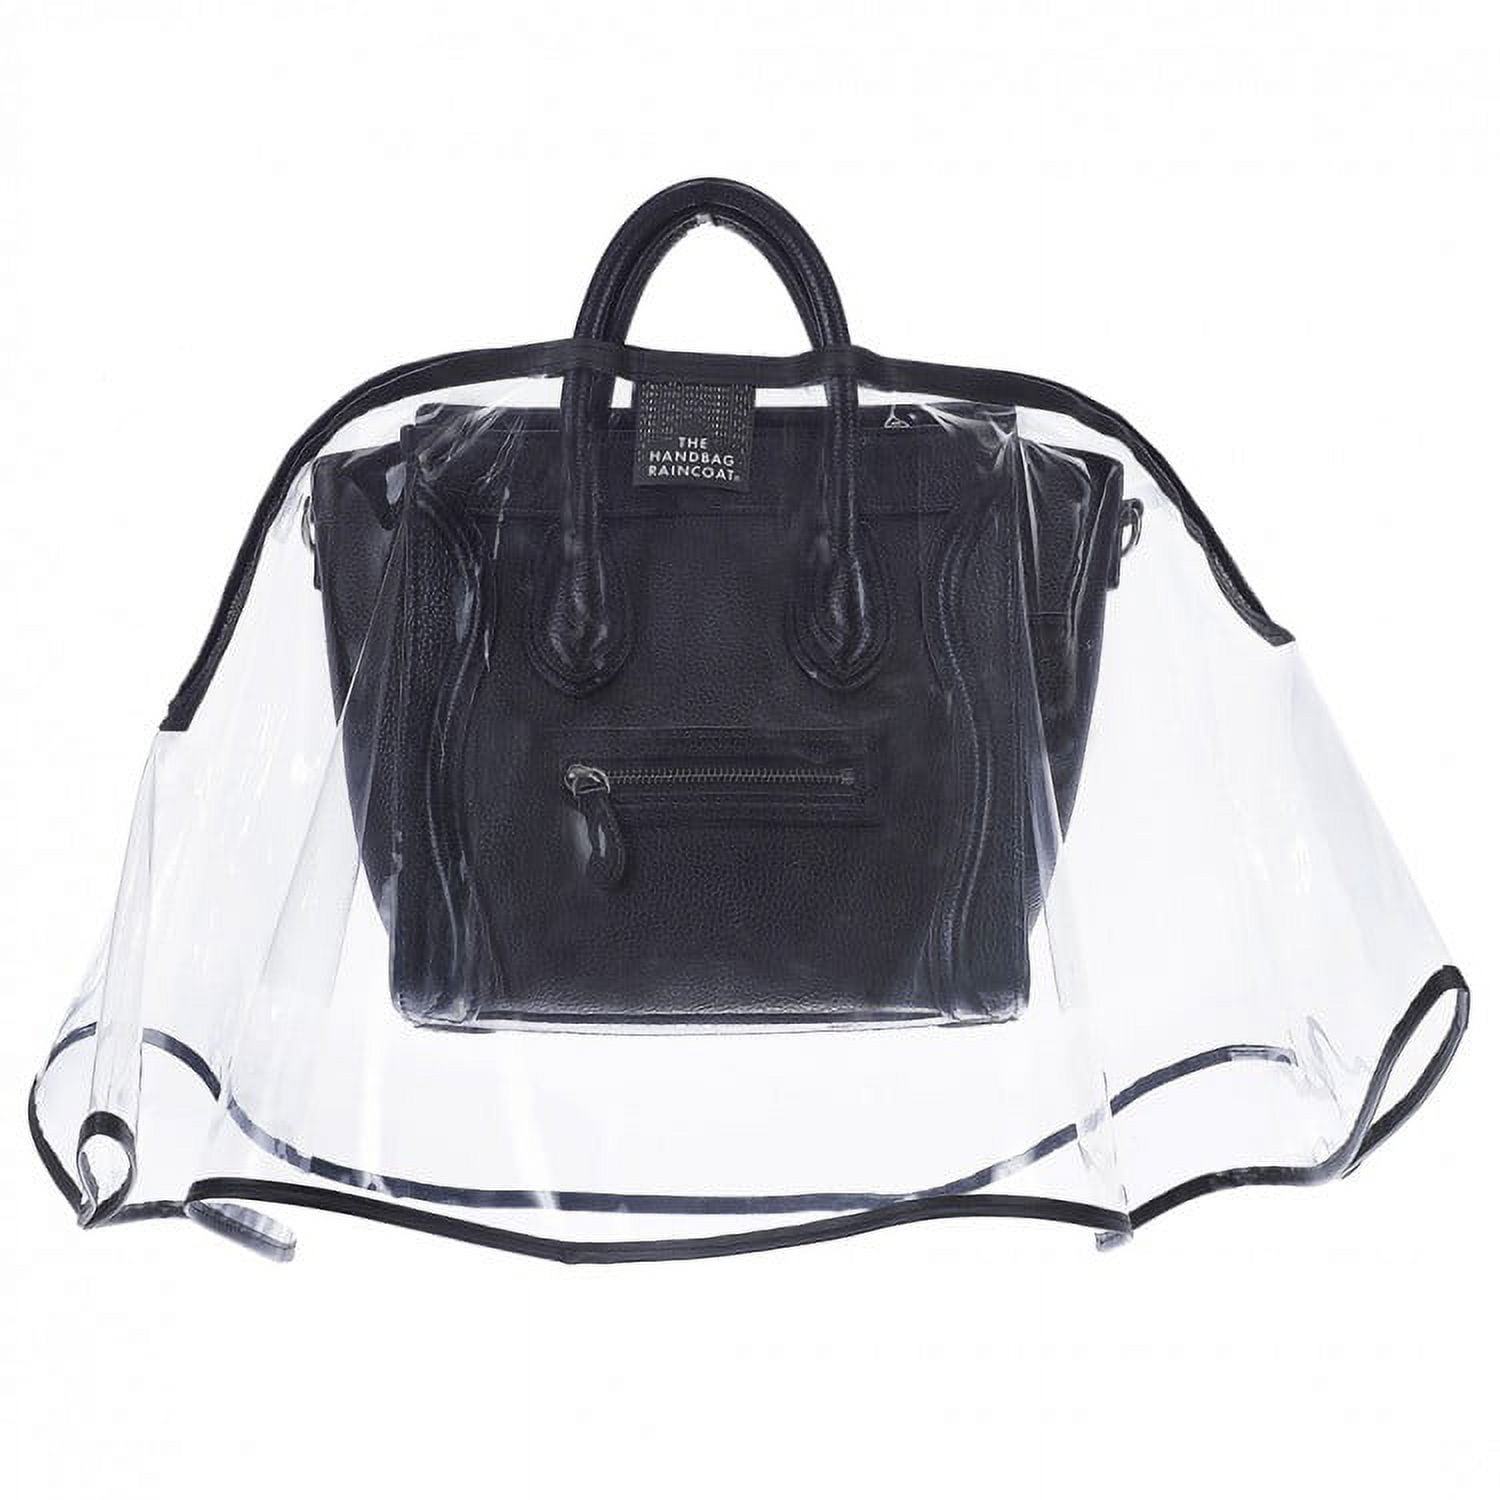 The Handbag Raincoat, Bags, New The Handbag Raincoat